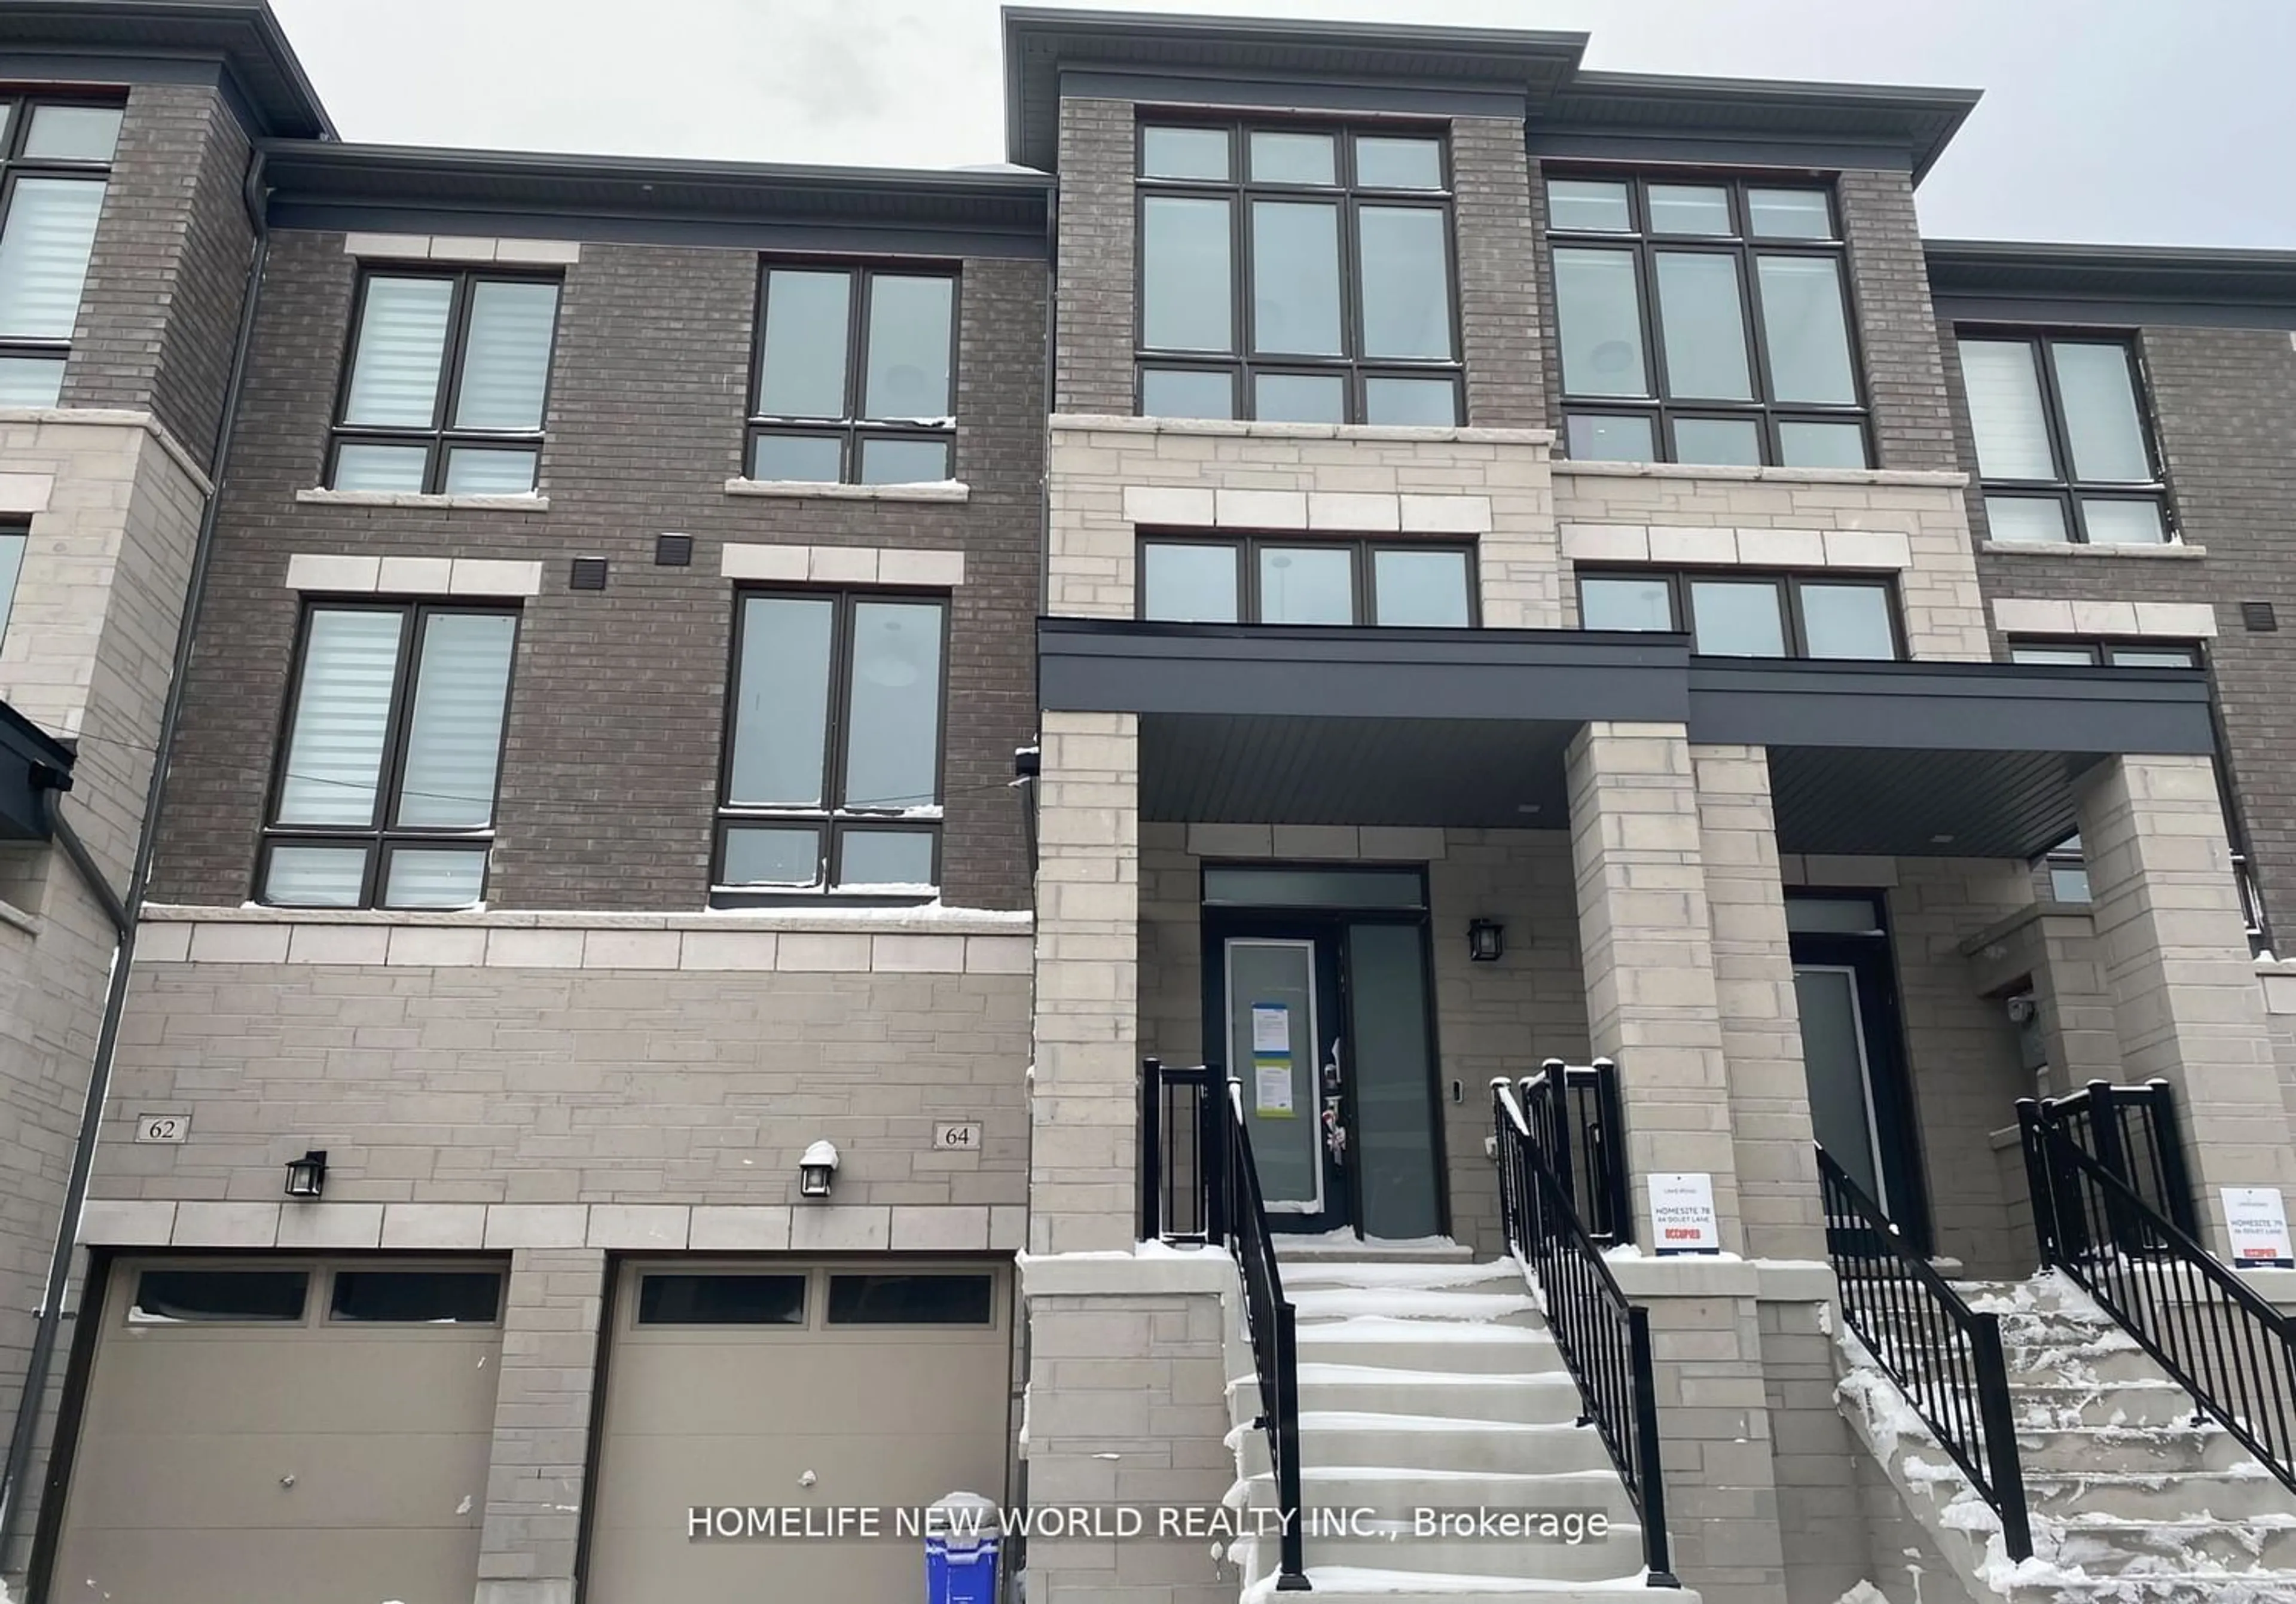 Home with stone exterior material for 64 Douet Lane, Ajax Ontario L1Z 0V4